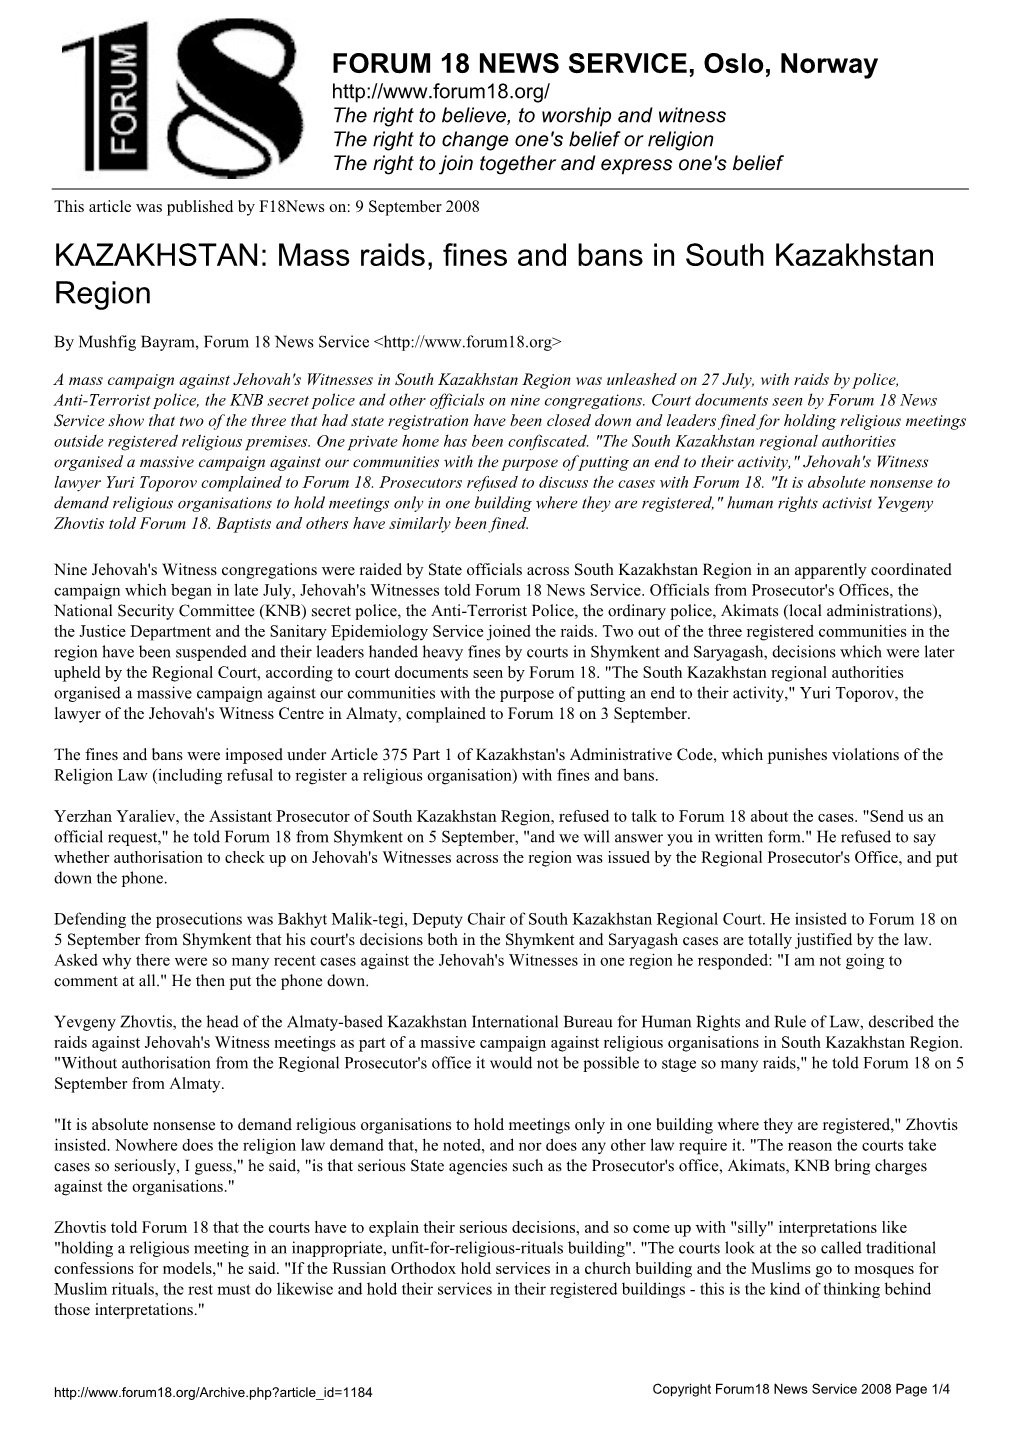 Mass Raids, Fines and Bans in South Kazakhstan Region